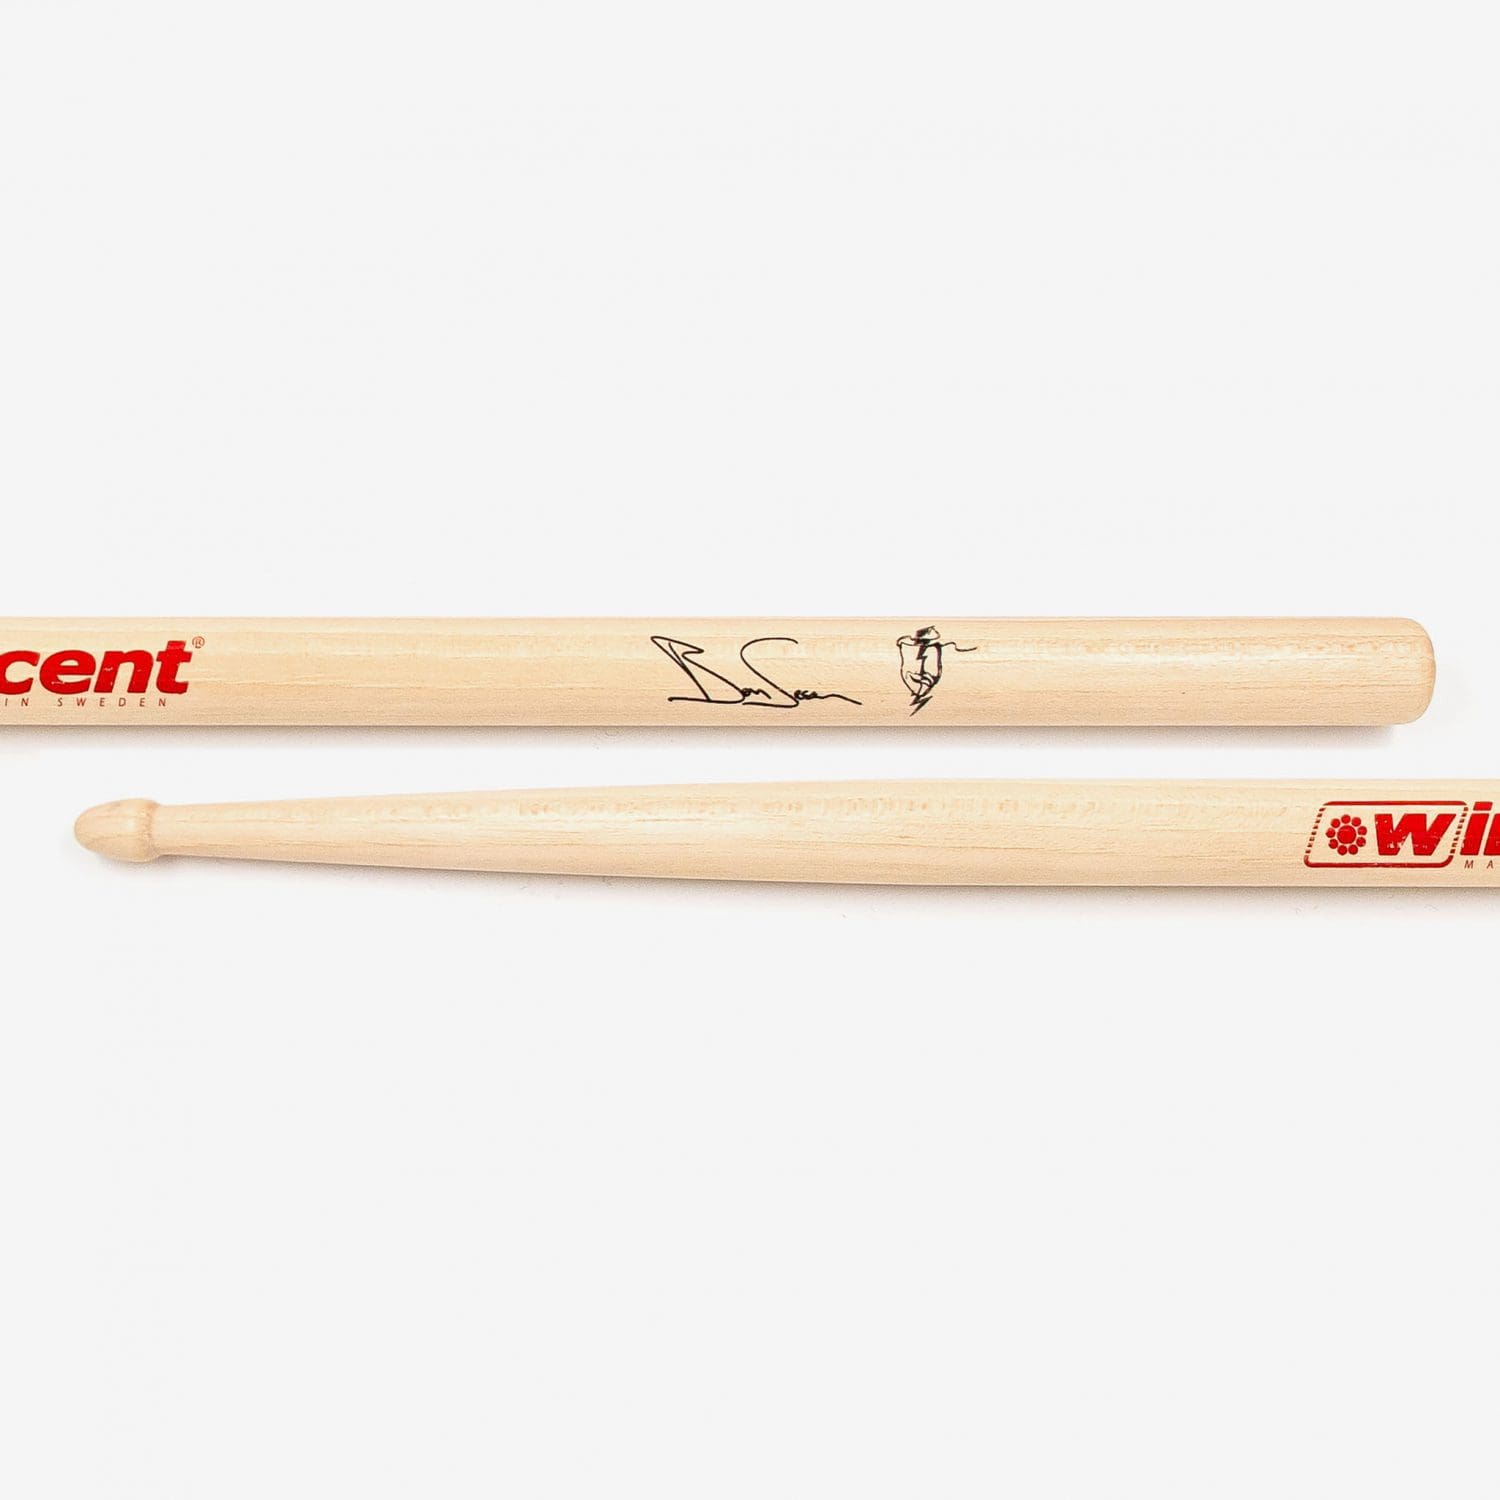 Ben Sesar Signature Drumsticks